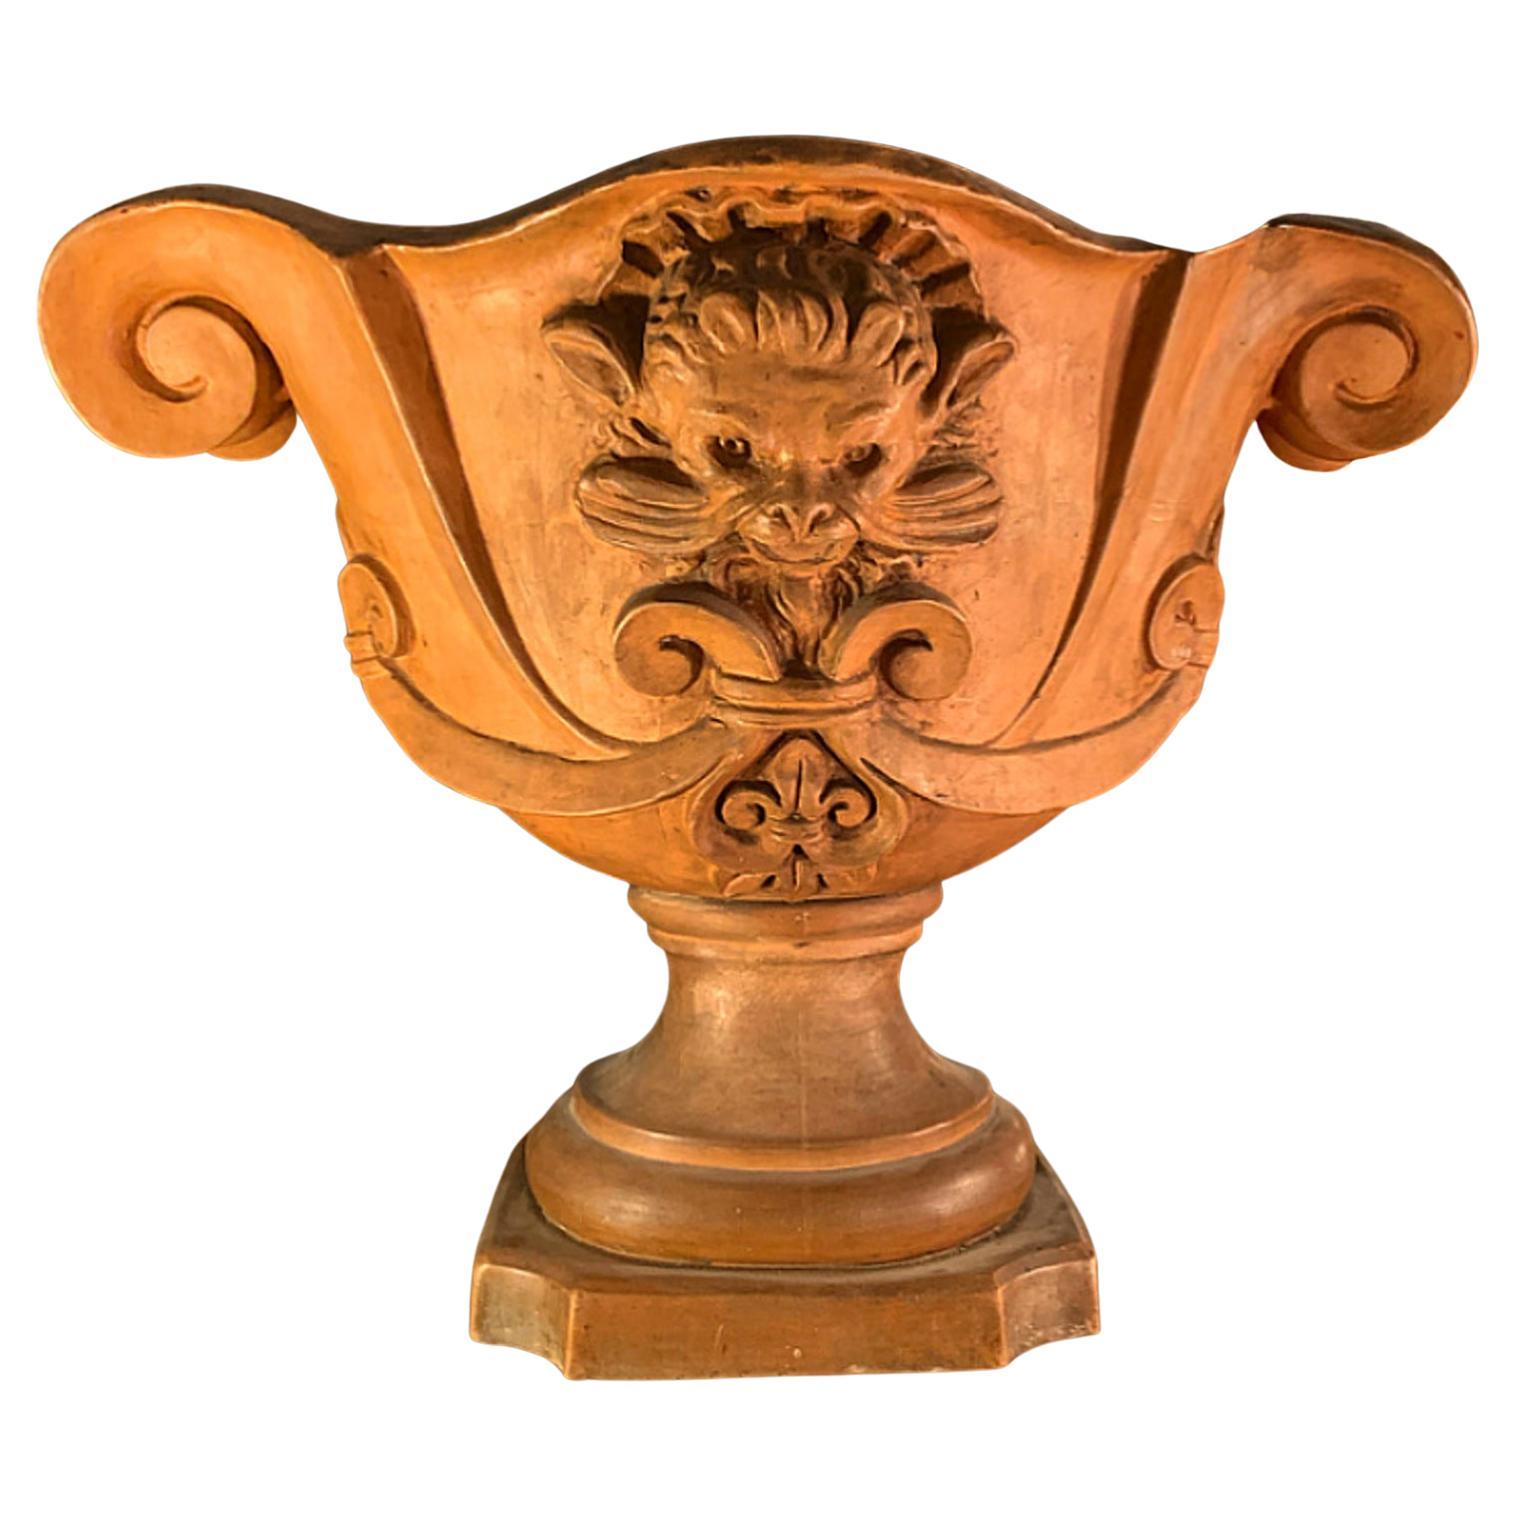 Early 20th Century Italy Terracotta Decorative Vase Urn